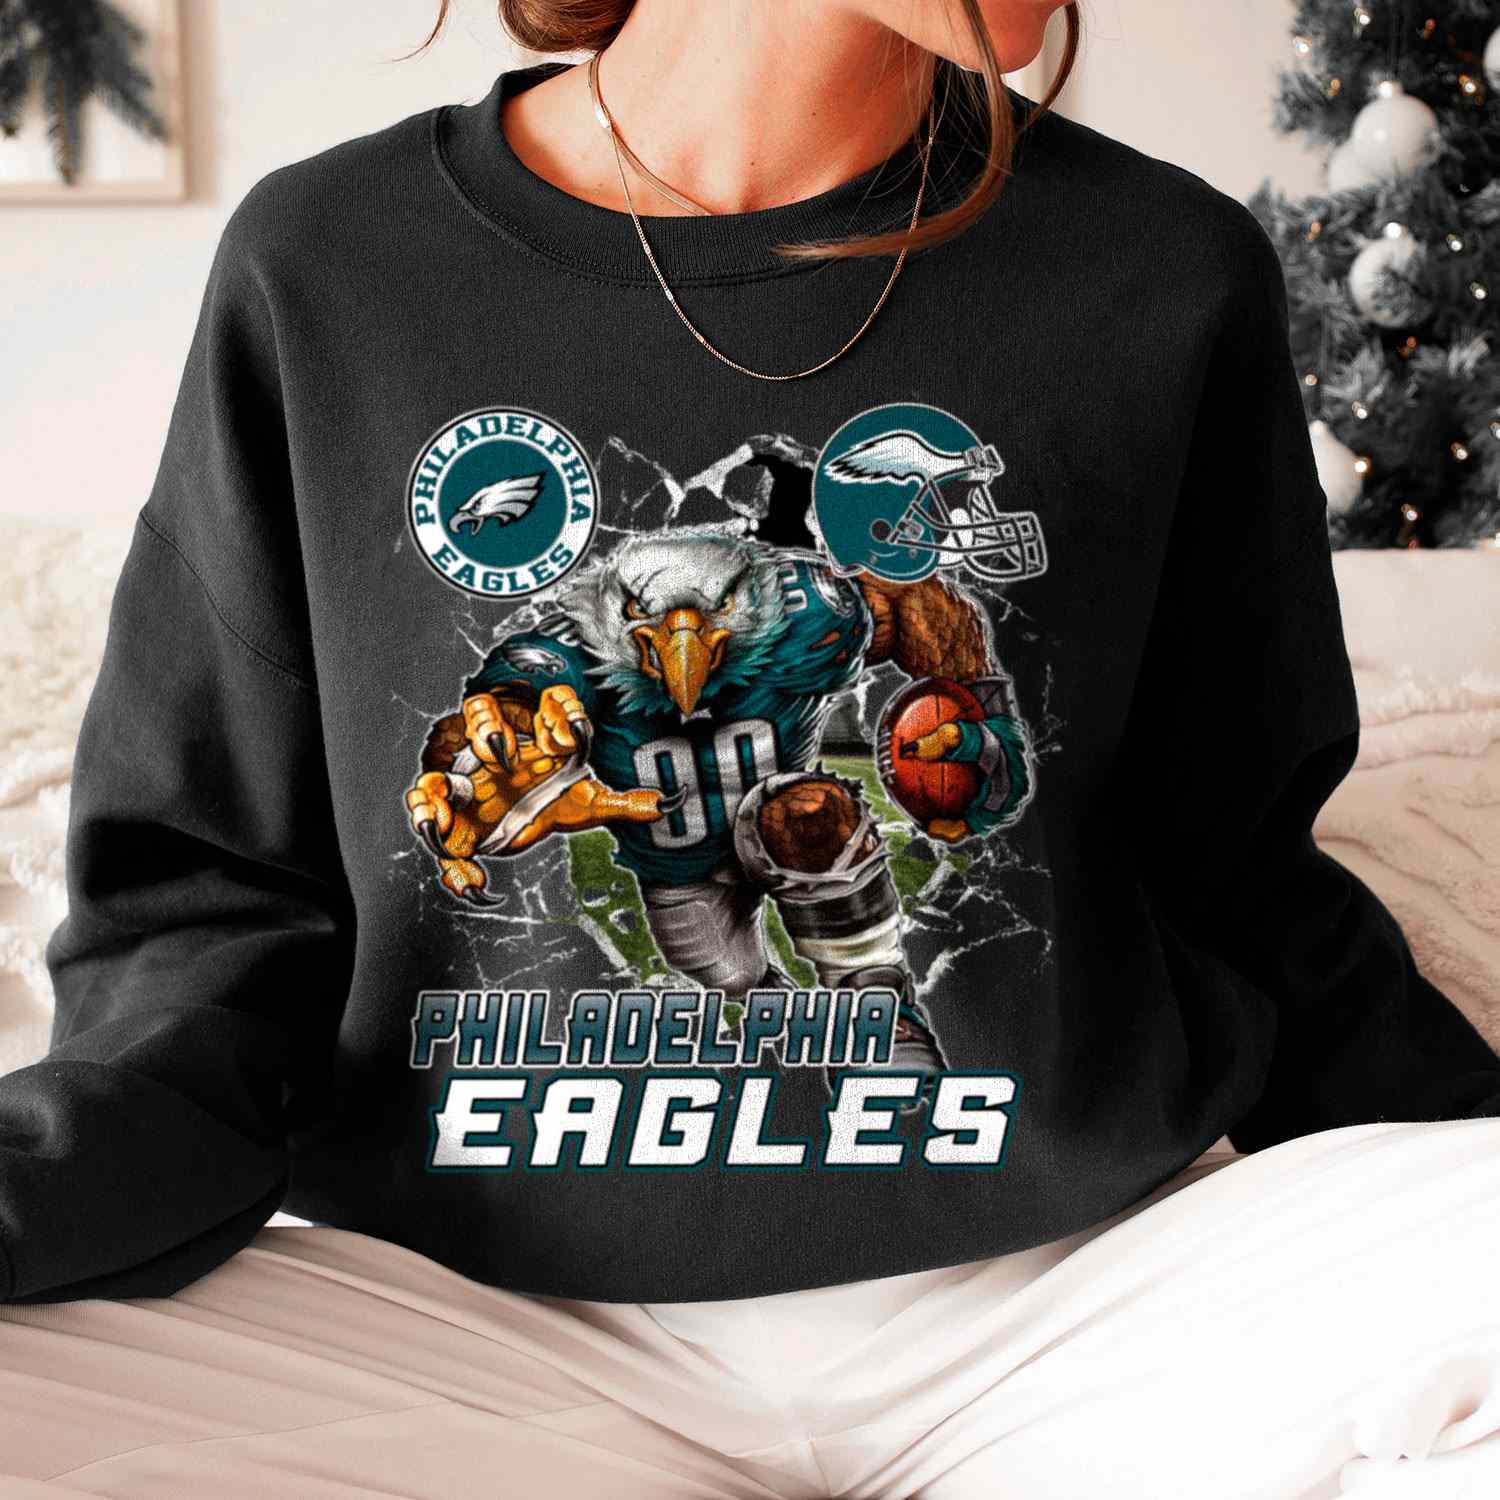 philadelphia eagles t shirt womens